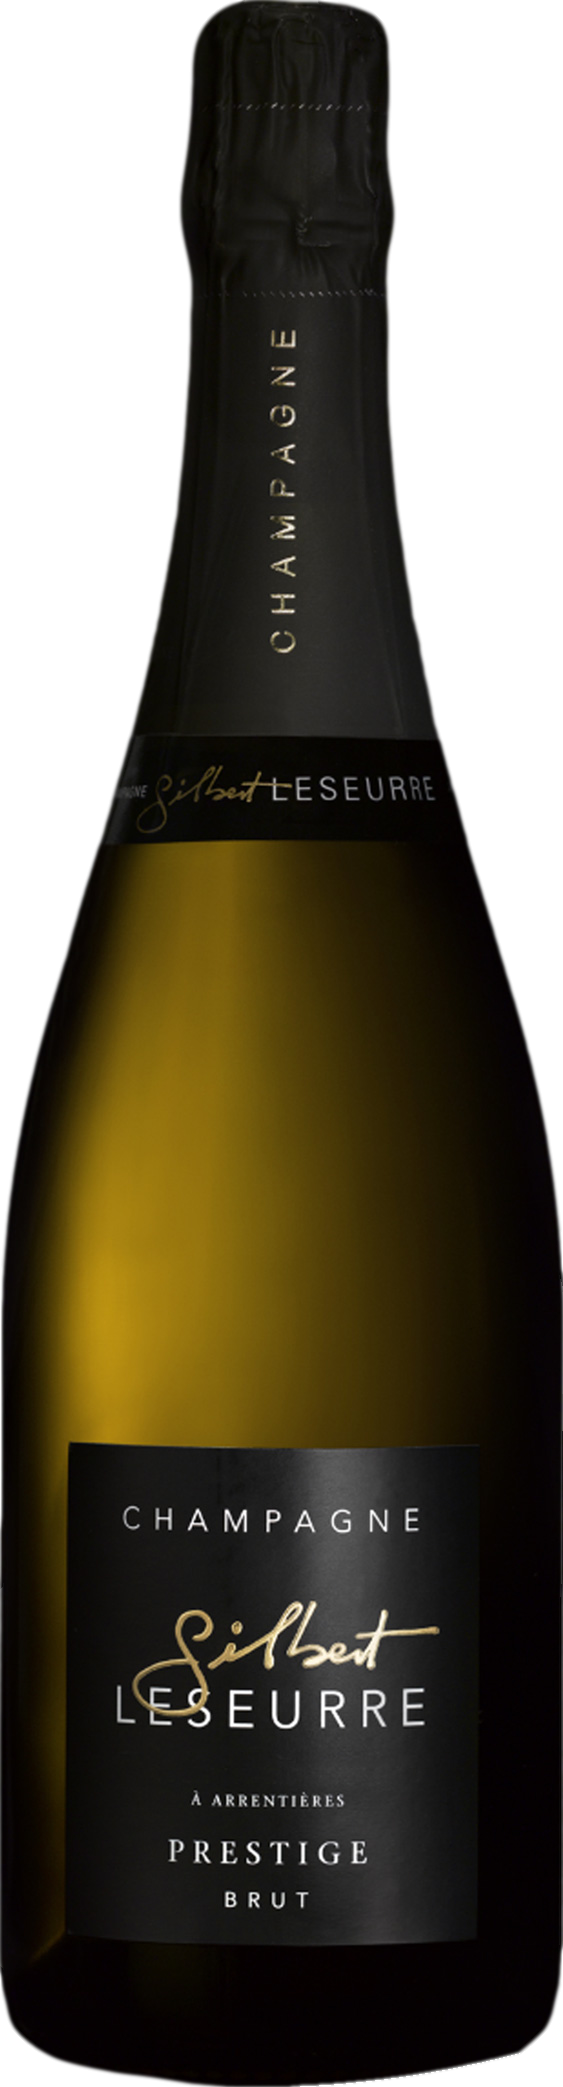 Champagne Gilbert Leseurre Prestige Brut